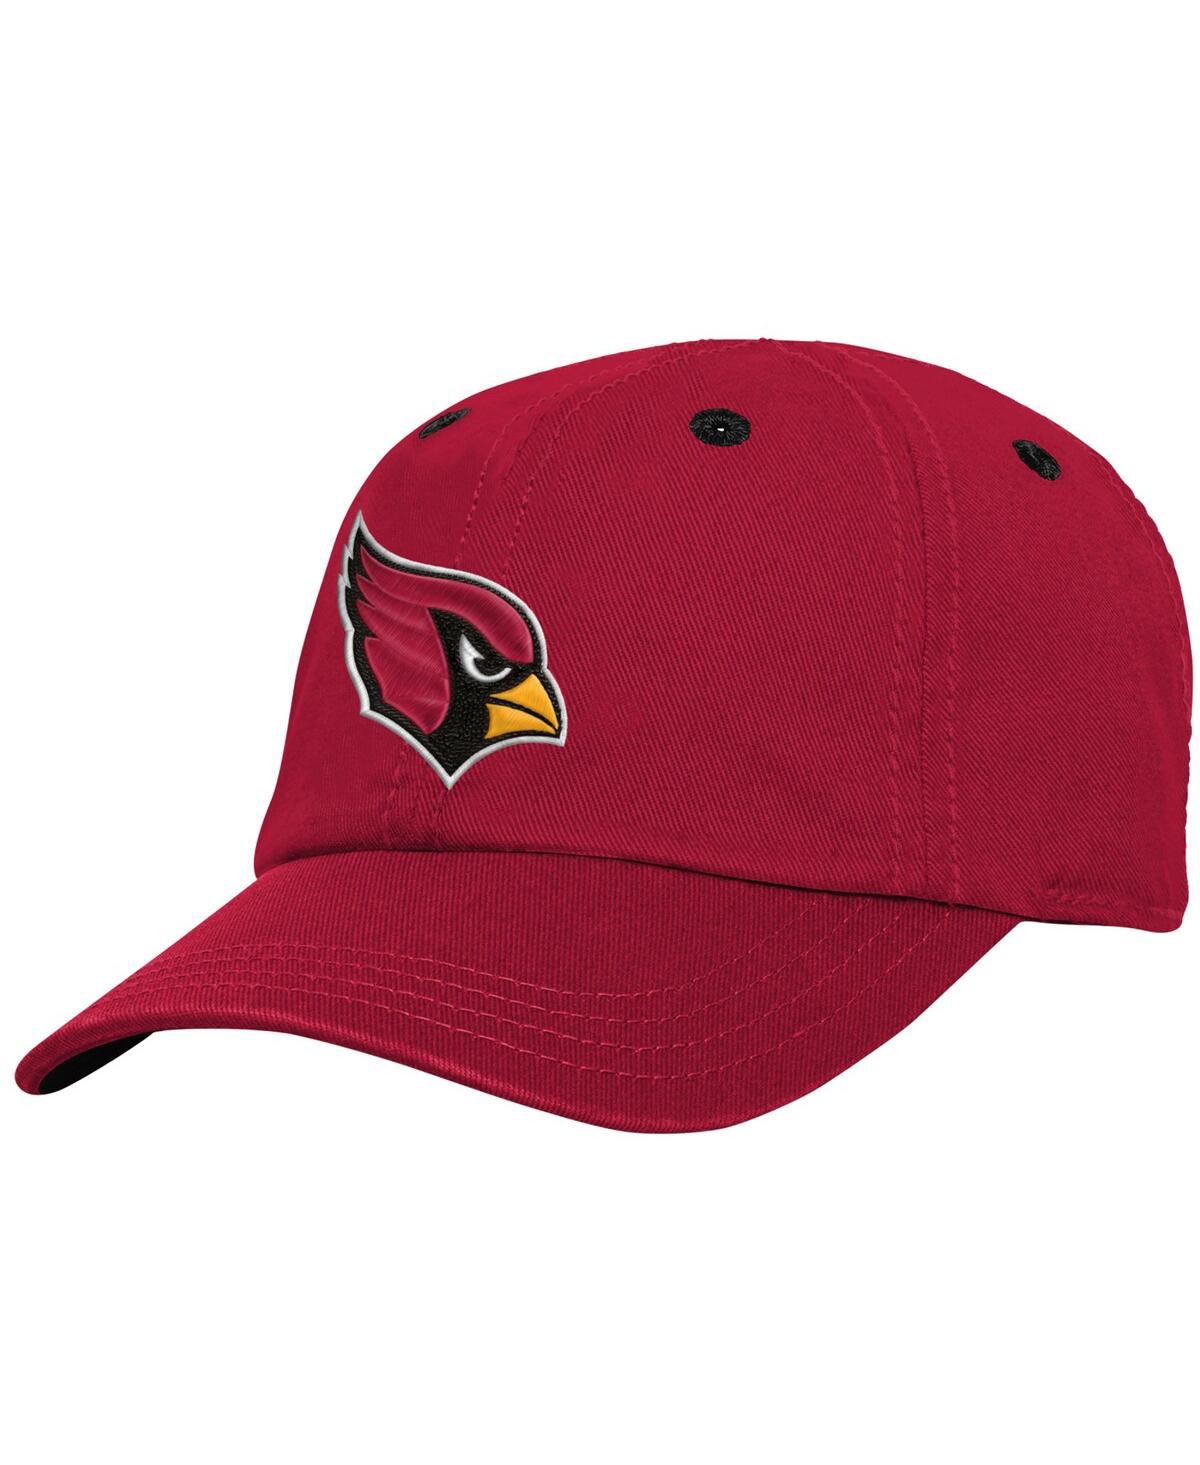 Outerstuff Babies' Infant Boys Cardinal Arizona Cardinals Slouch Flex Hat